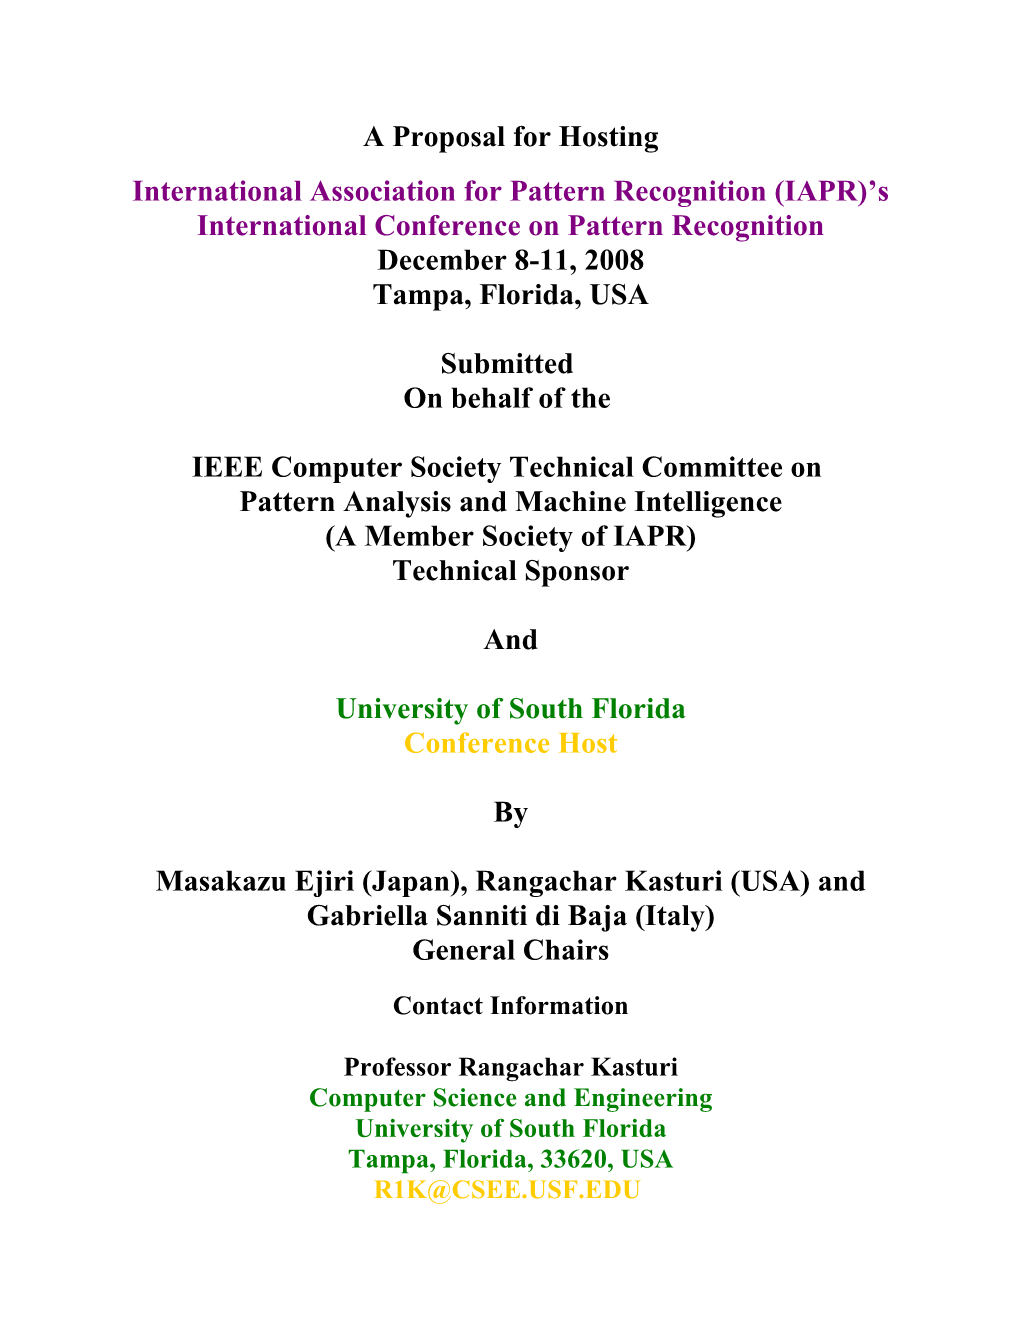 ICPR 2008 - Conference Organization